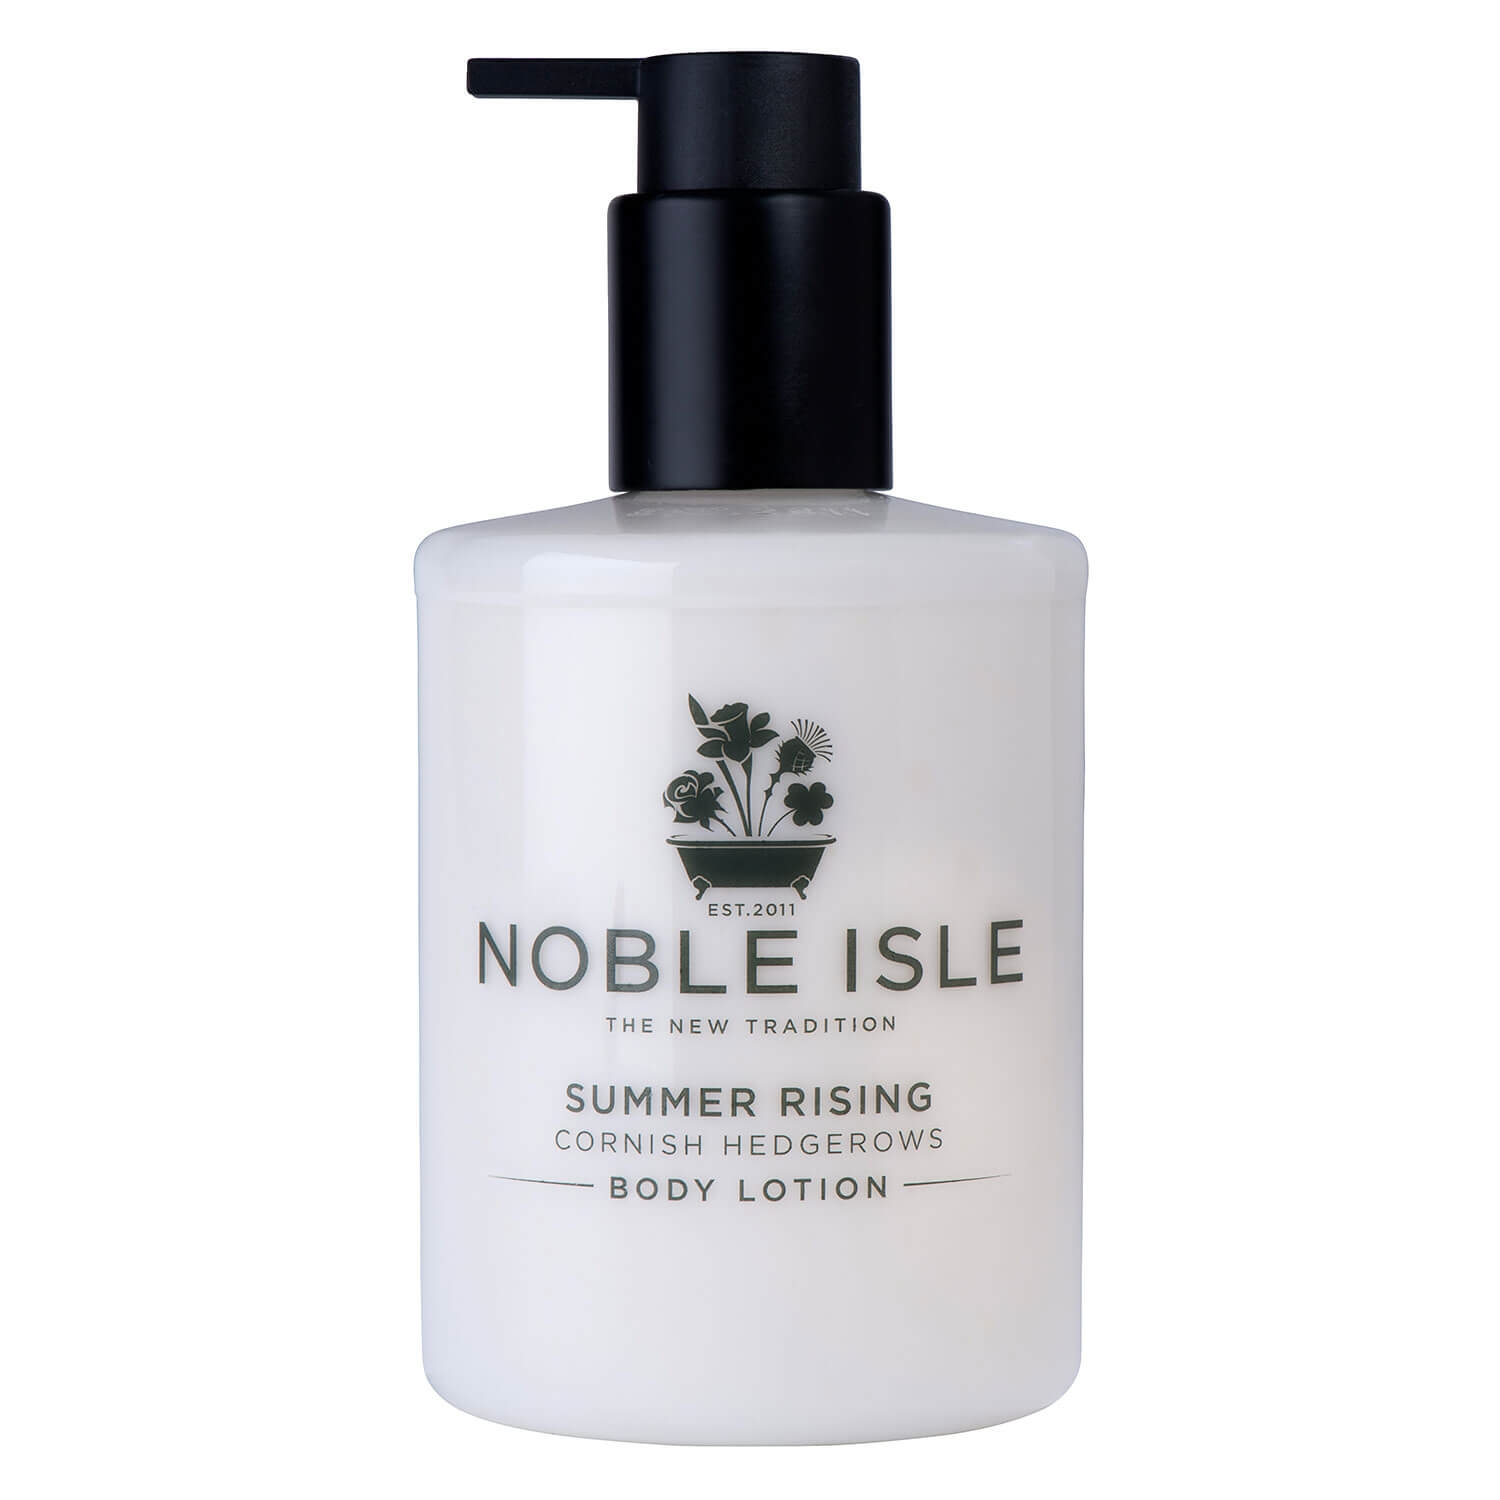 Produktbild von Noble Isle - Summer Rising Body Lotion